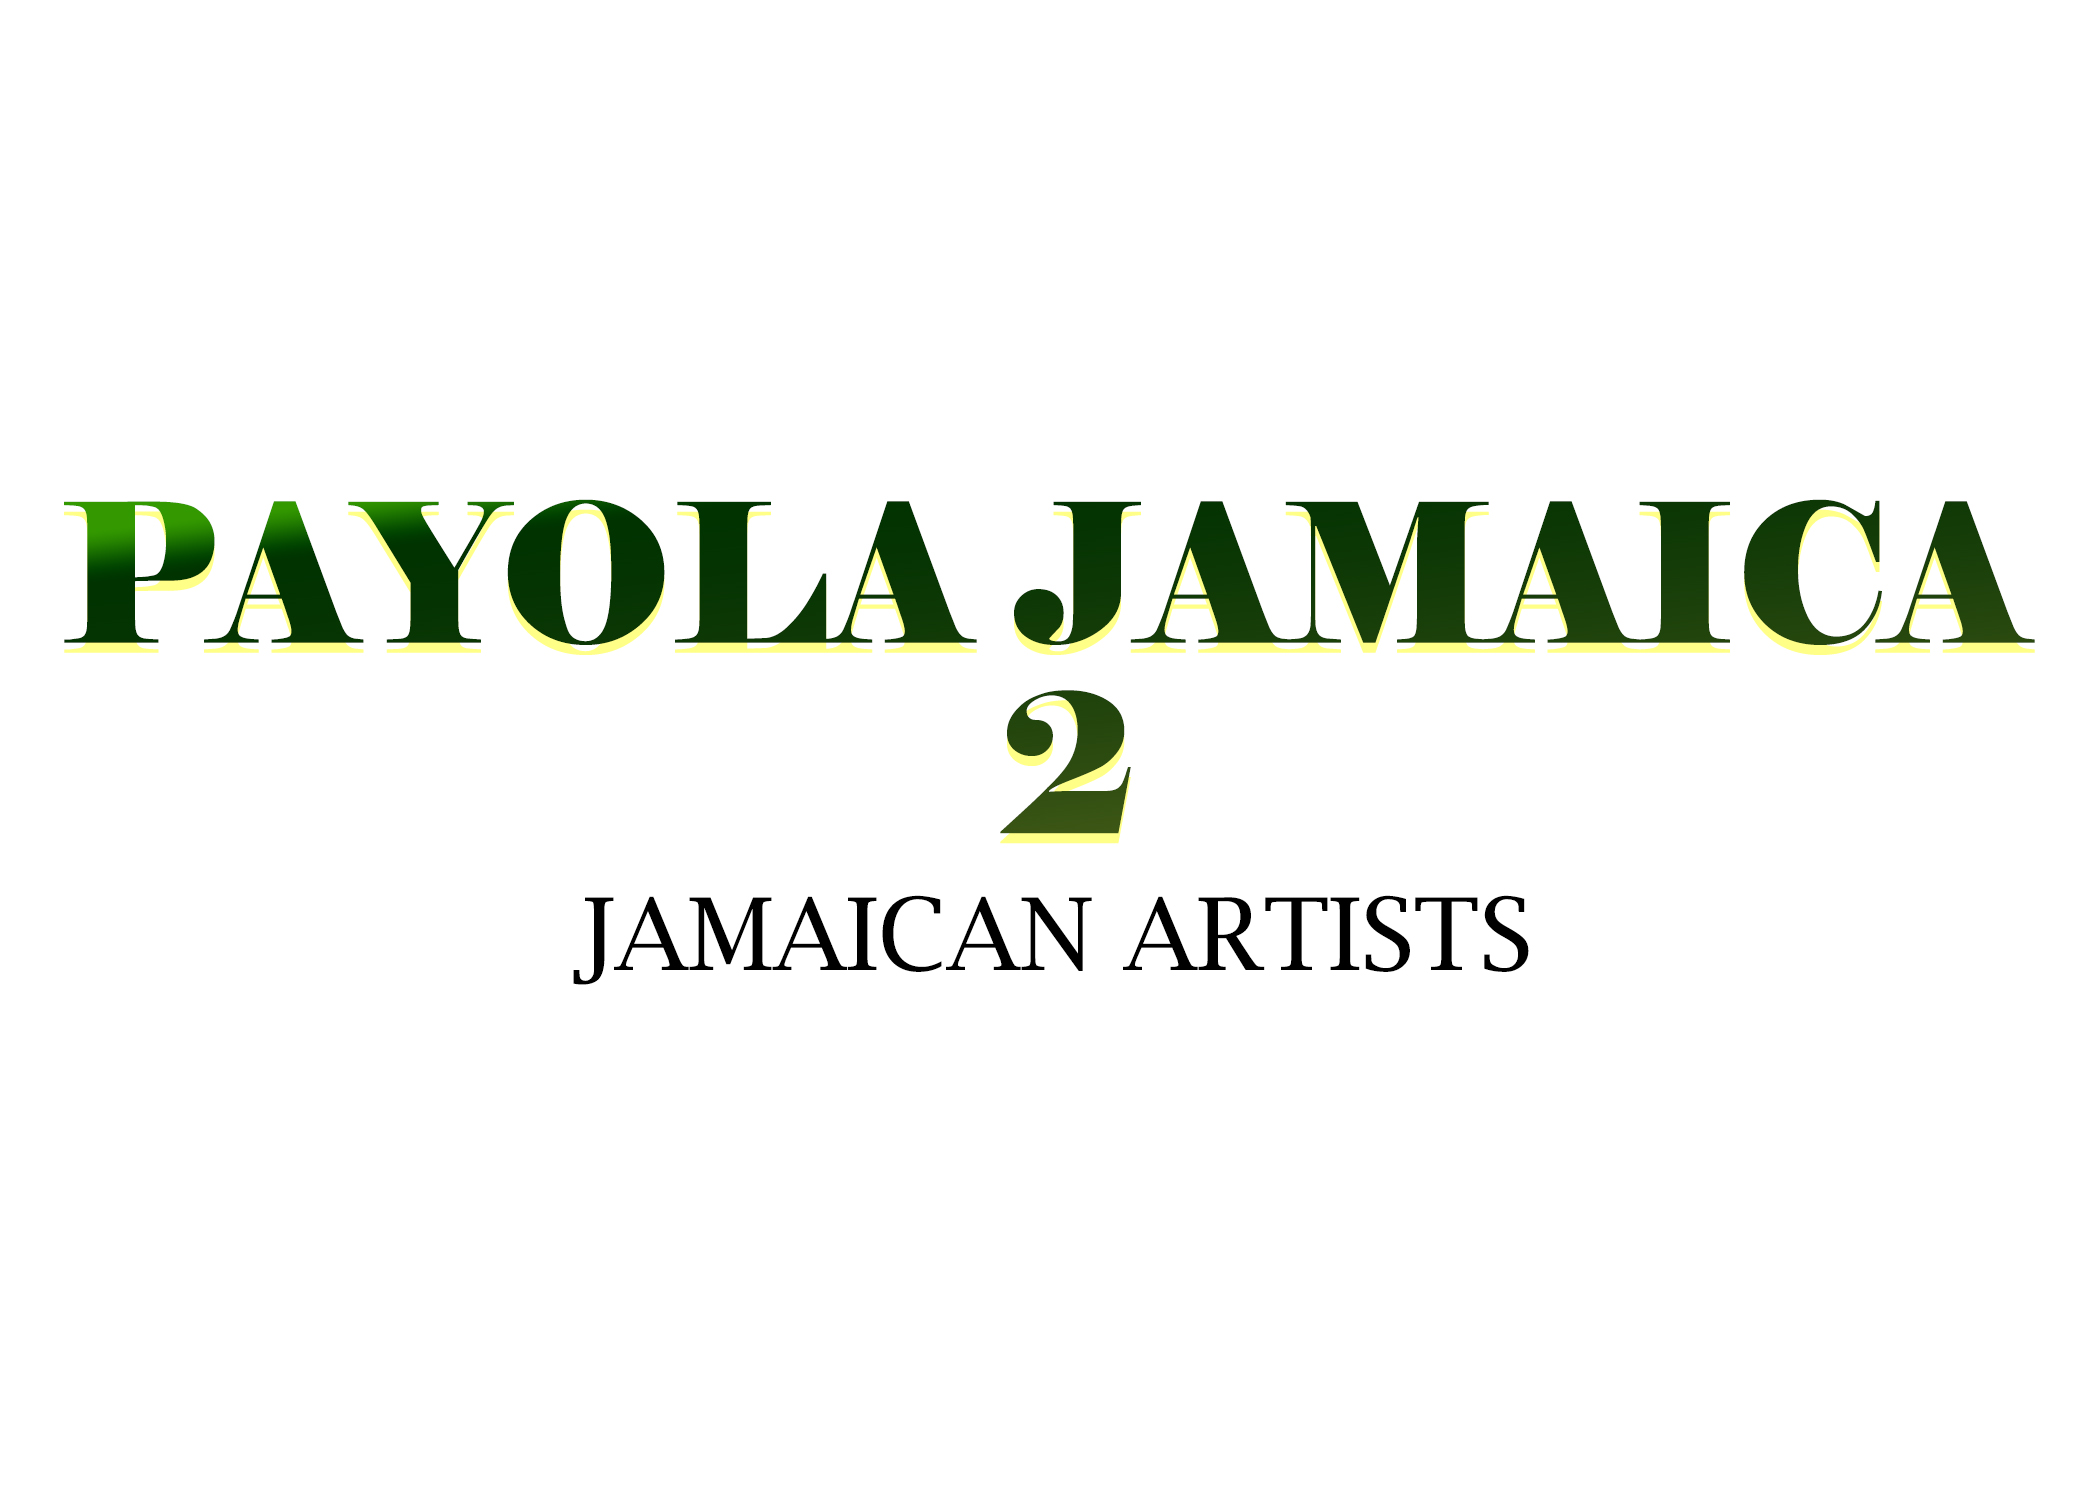 Payola Jamaica 2